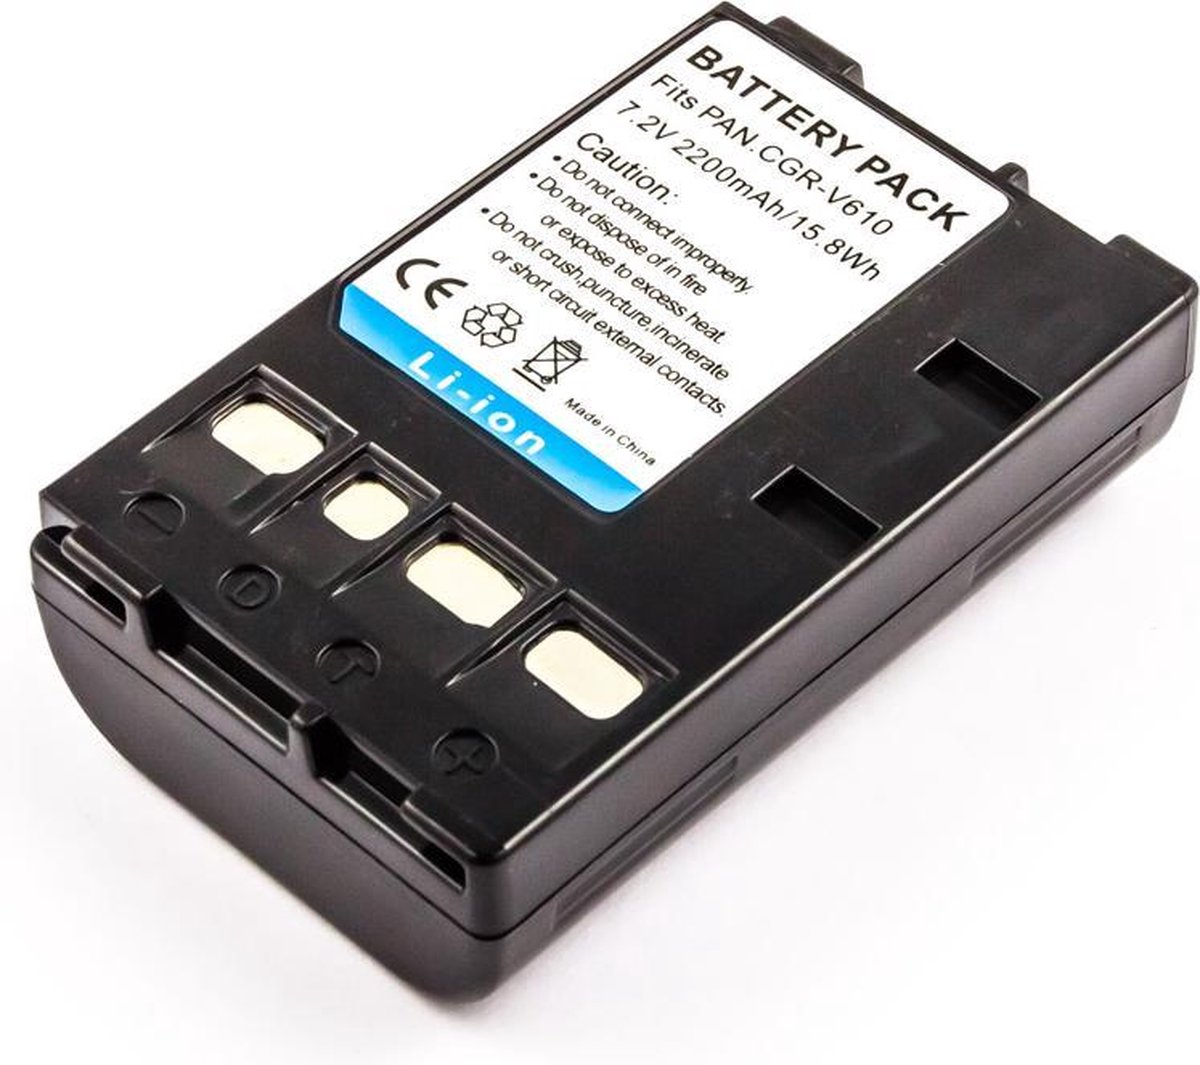 AccuCell-batterij geschikt voor Panasonic CGR-V14S-batterij CGR-V610 CGR-V620